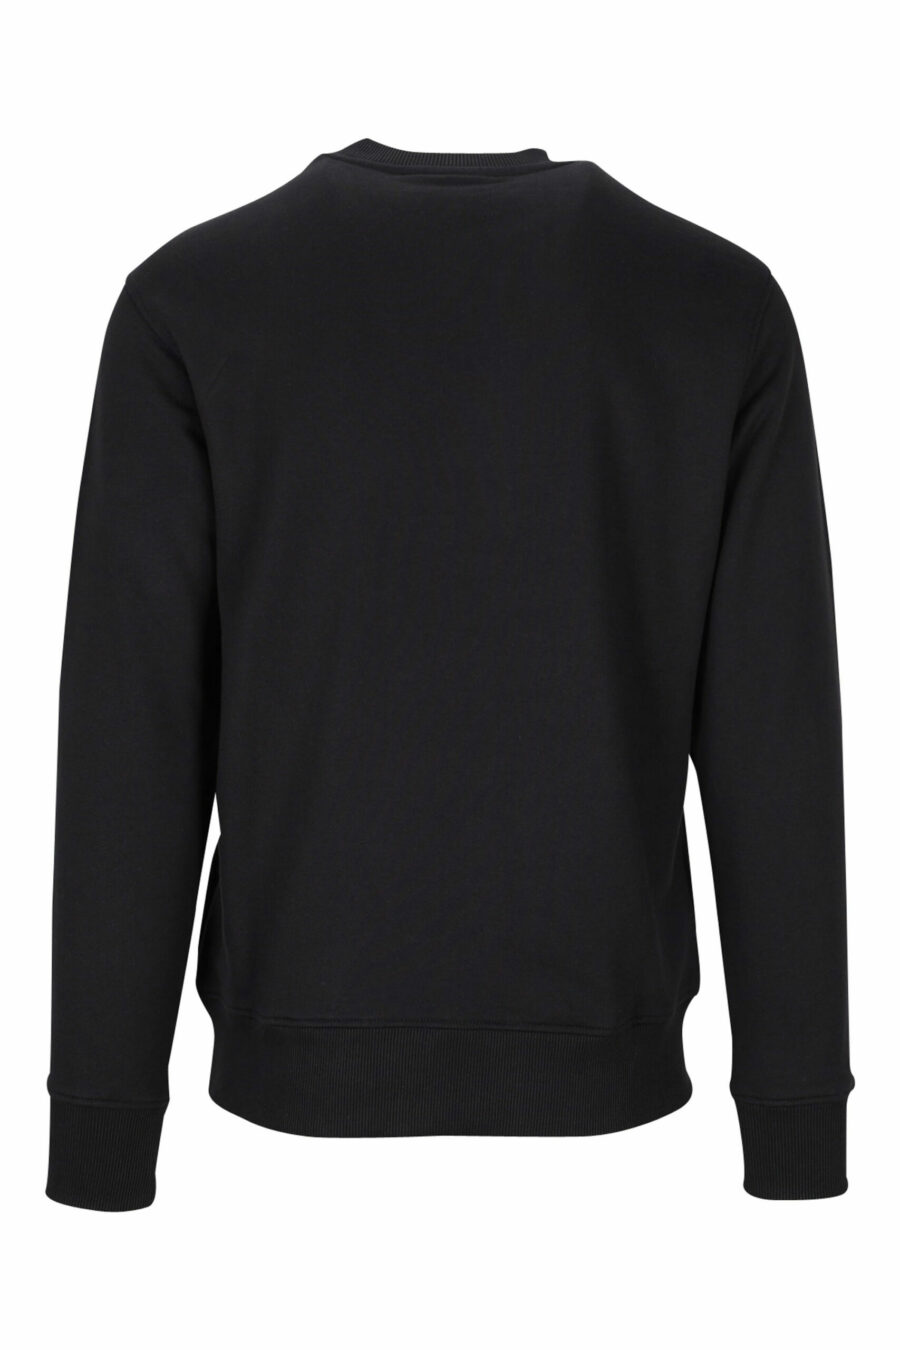 Schwarzes Sweatshirt mit monochromem Maxilogo - 8052019469110 1 skaliert